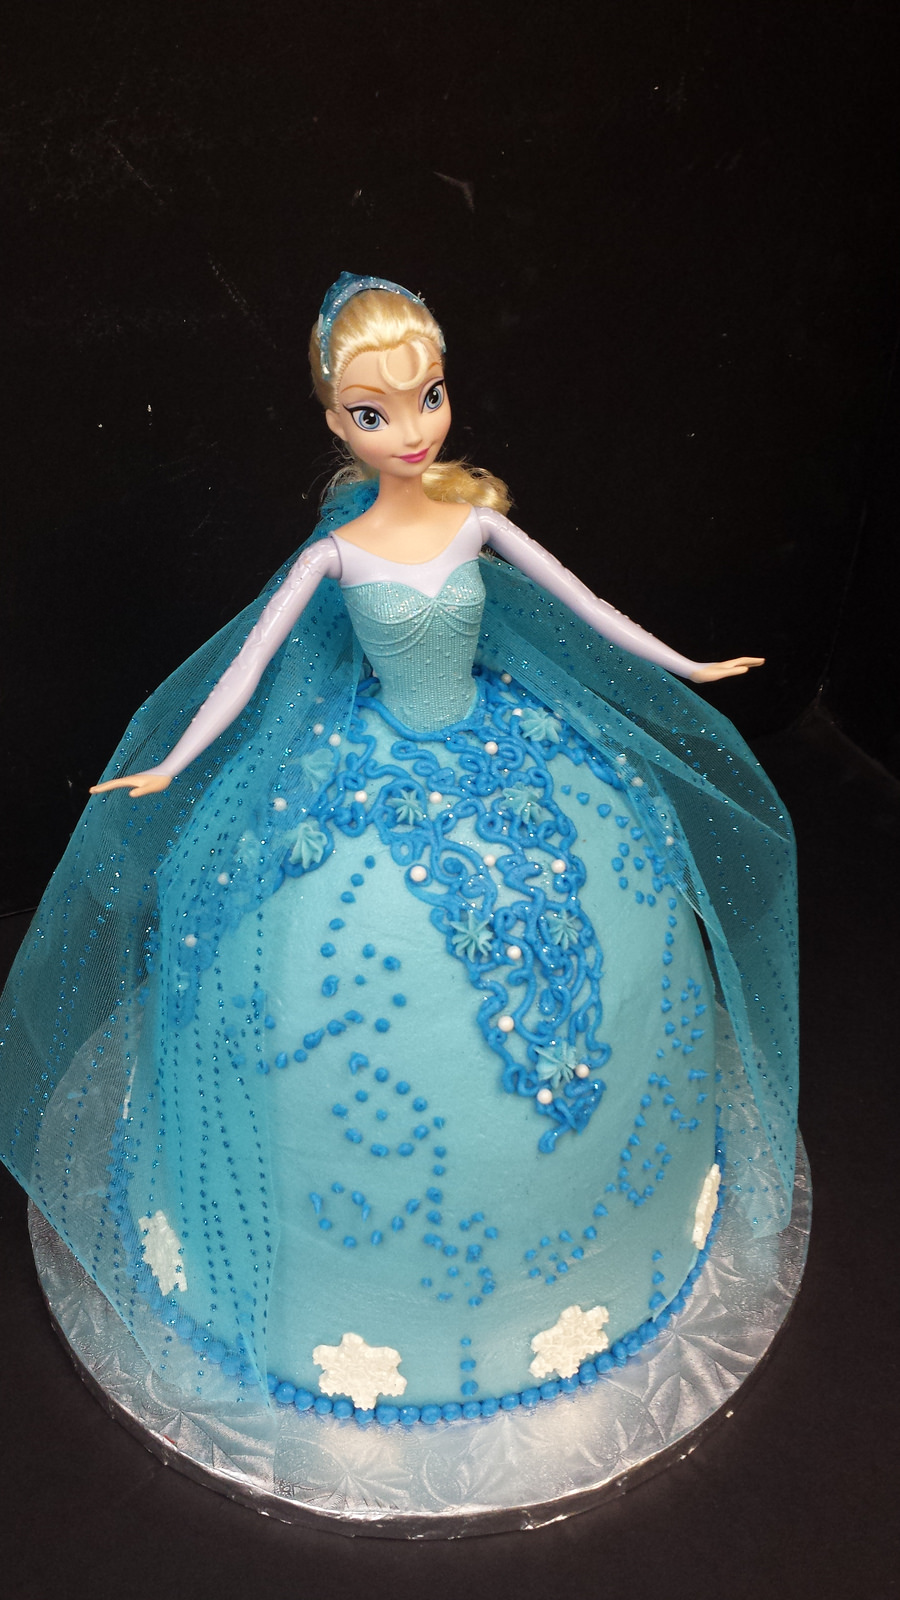 View Fullsize More Disney Frozen Inspired Cake Photos